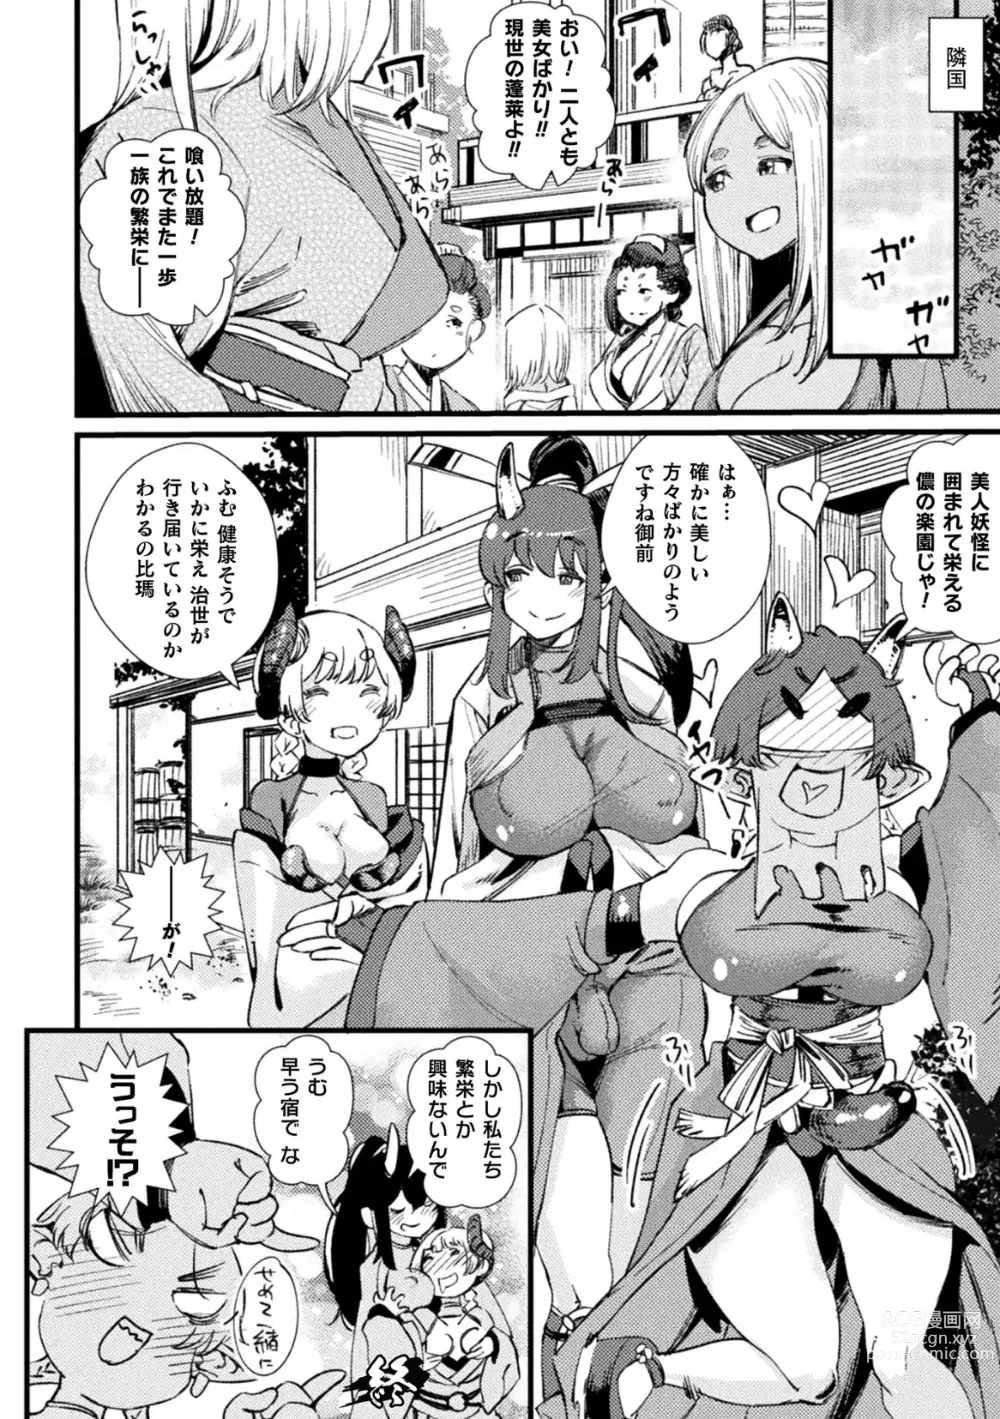 Page 166 of manga Kukkoro Heroines Vol. 35